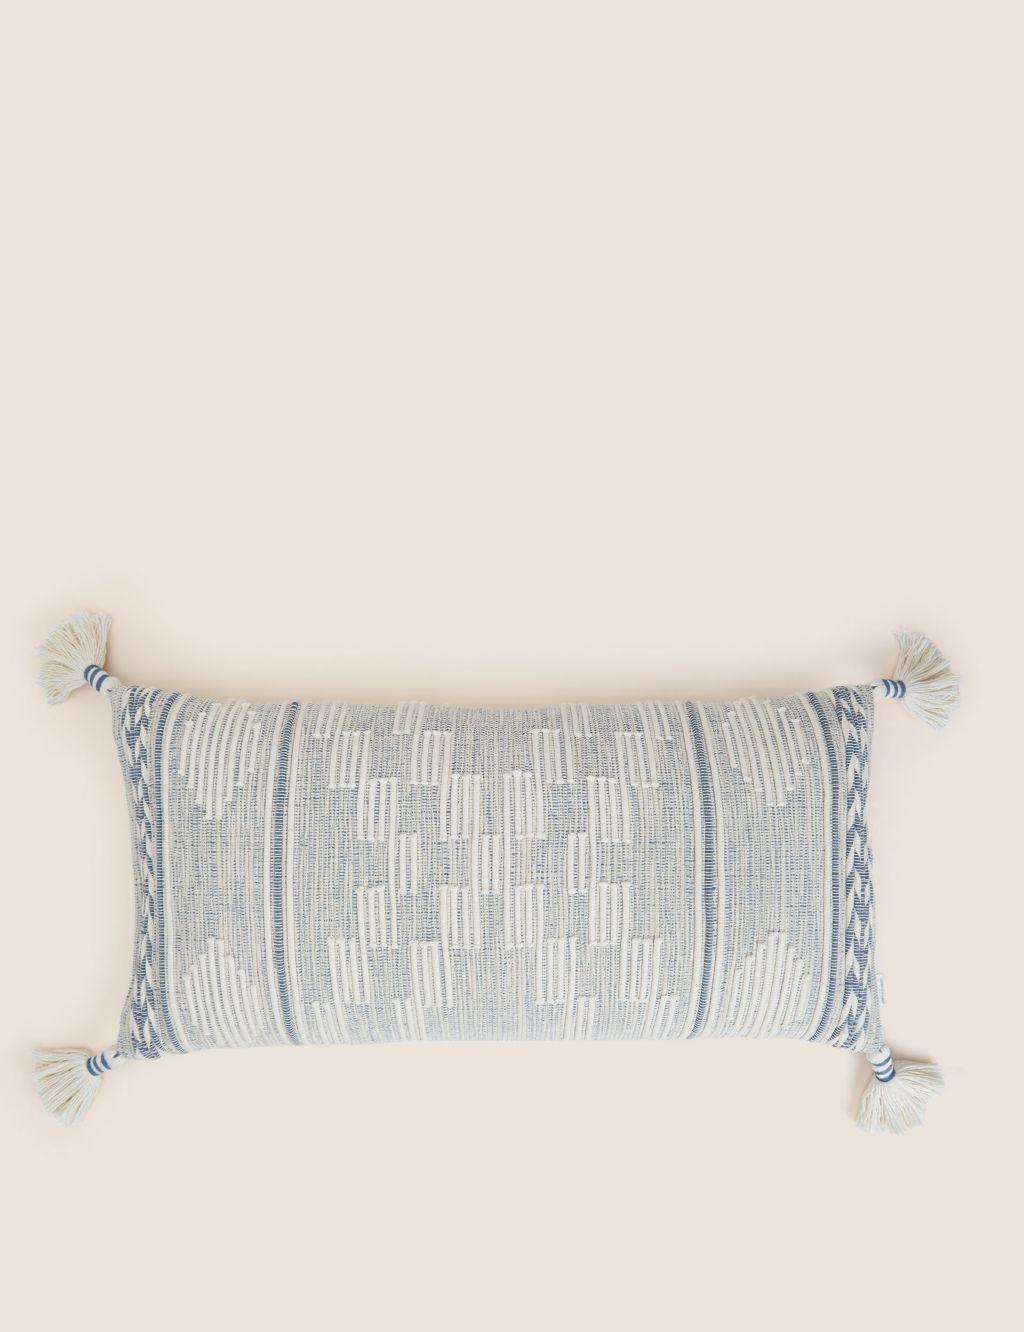 Seville Amar Large Textured Bolster Cushion image 1